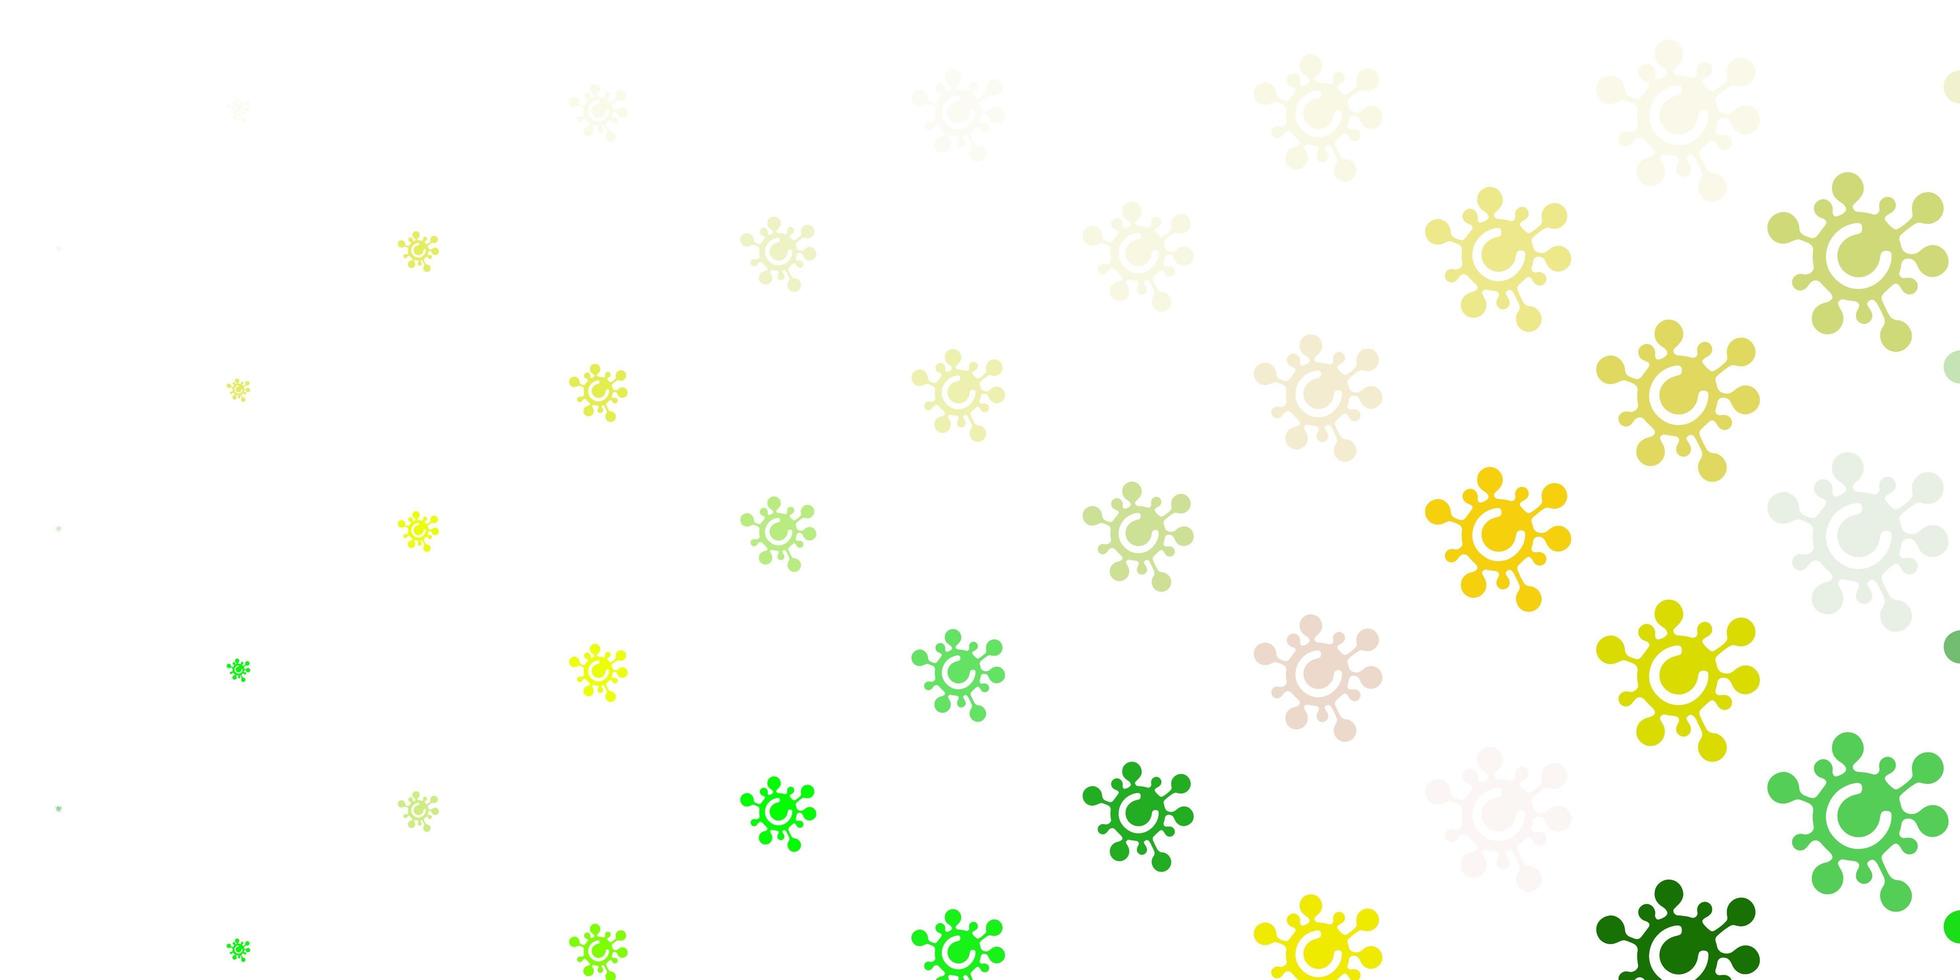 patrón de vector amarillo verde claro con elementos de coronavirus